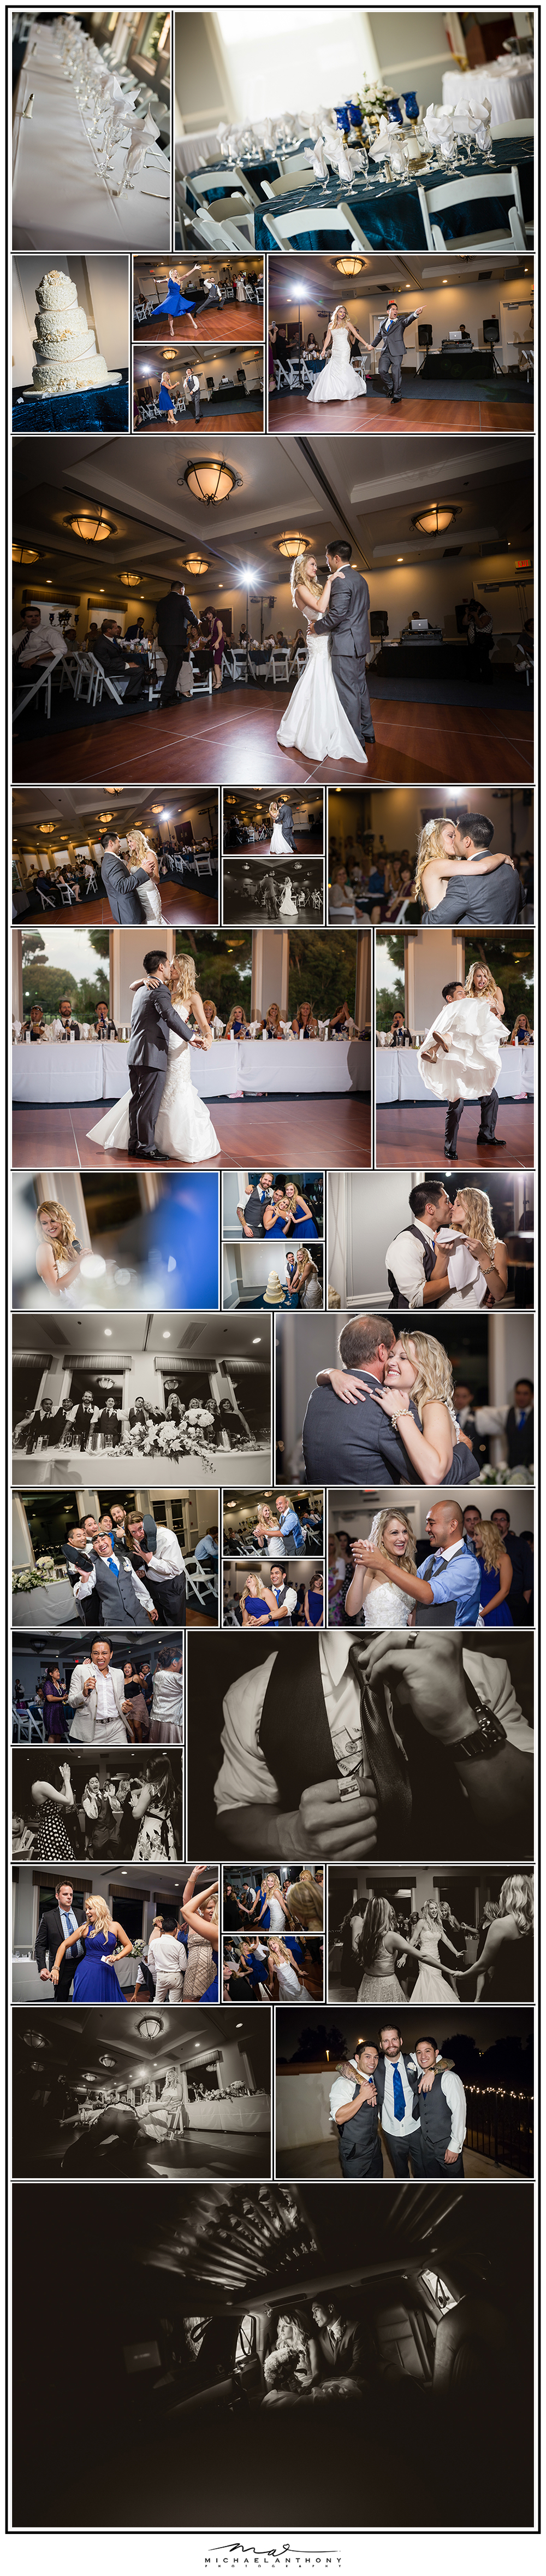 Breanna and Derek | Meadowlark Golf Course Wedding Photos | Los Angeles Wedding Photographers, Michael Anthony Photography Blog: Los Angeles Wedding Photography